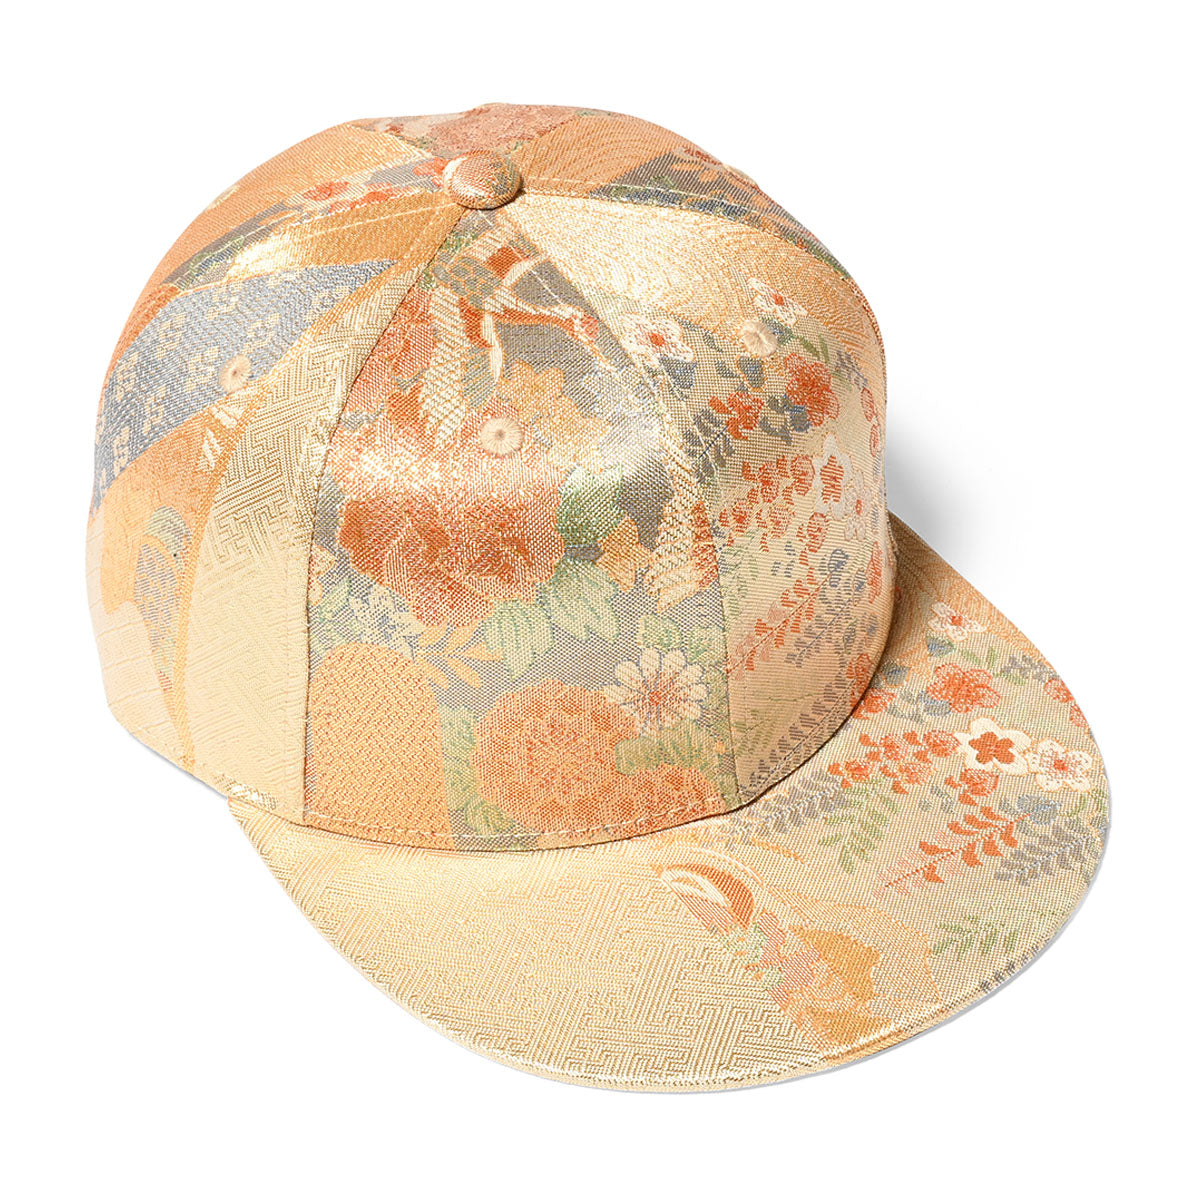 HOMEGAME - TYPE3 KIMONO TRADITIONAL JAPANESE FABRIC SNAPBACK CAP